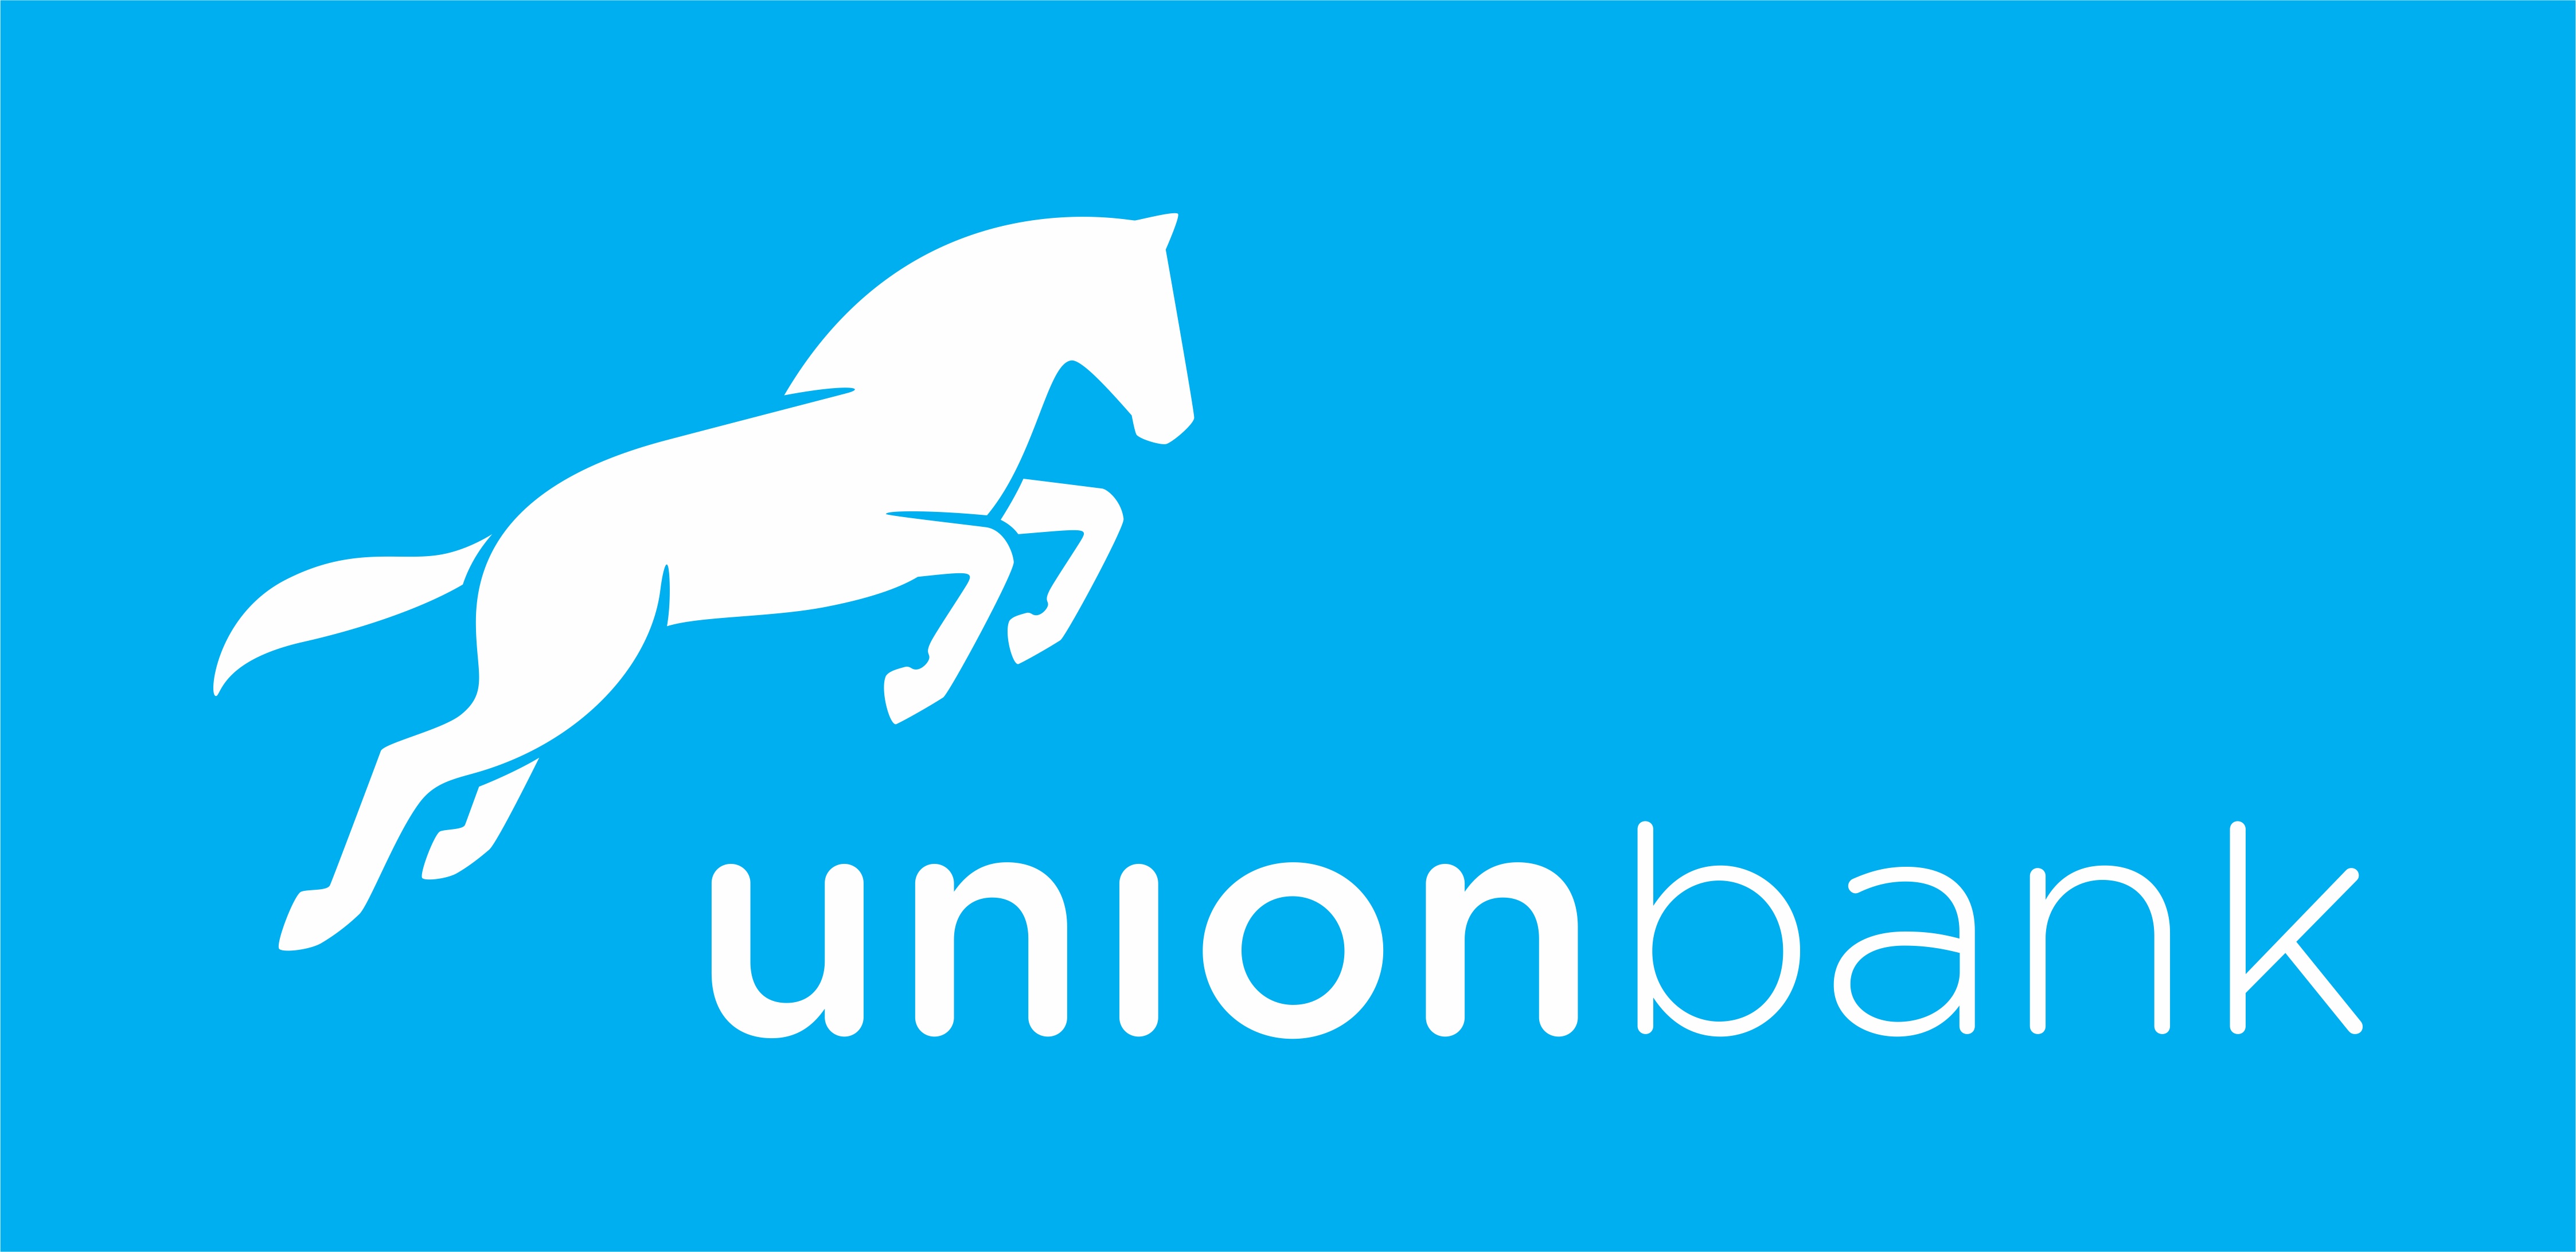 Union Bank rebrands, unveils new Logo